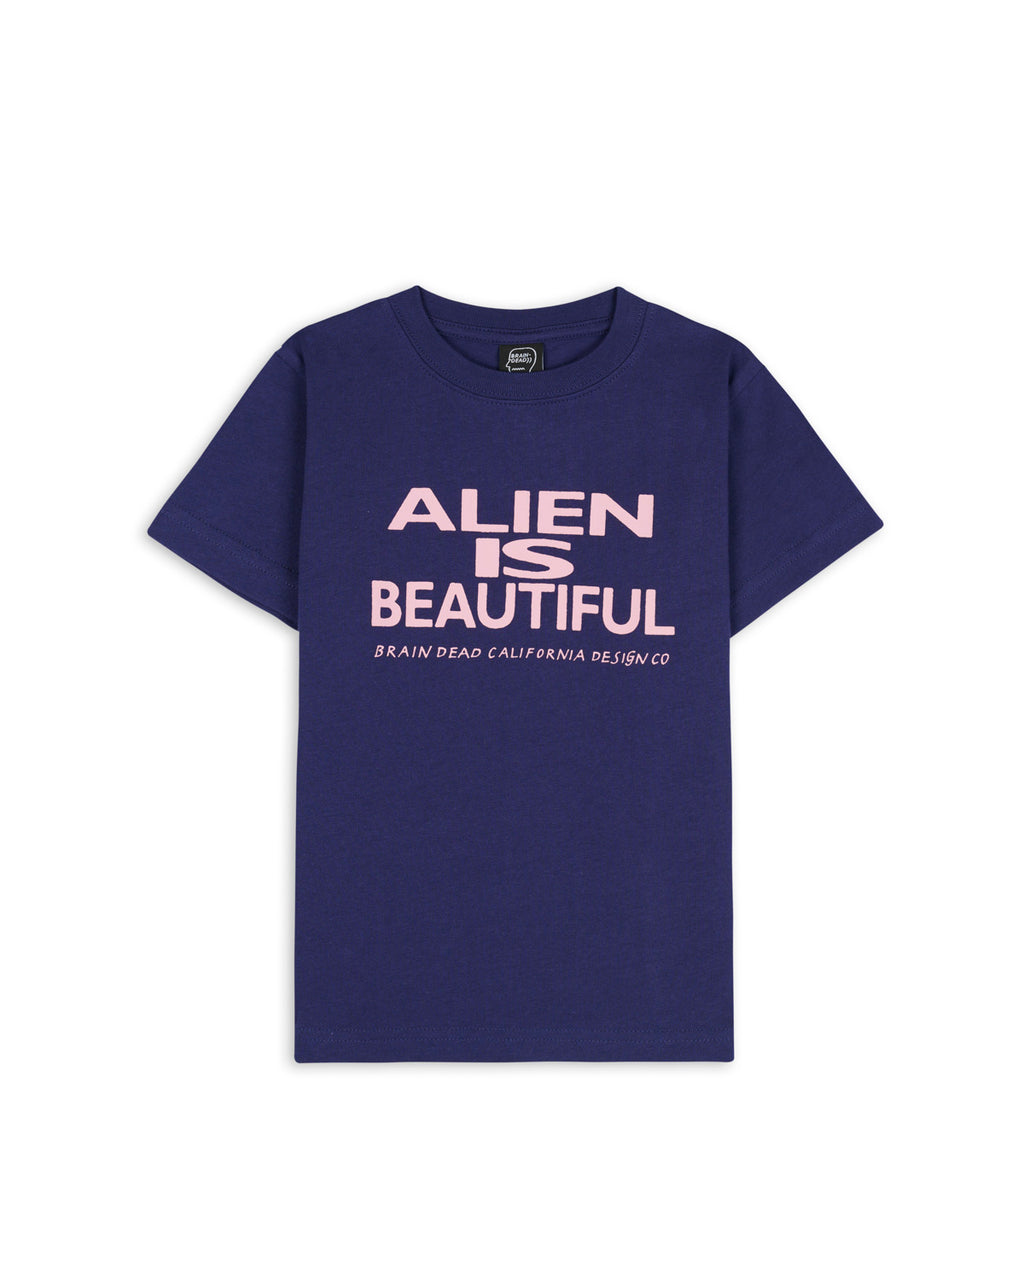 Beautiful Alien Kids T-Shirt - Navy